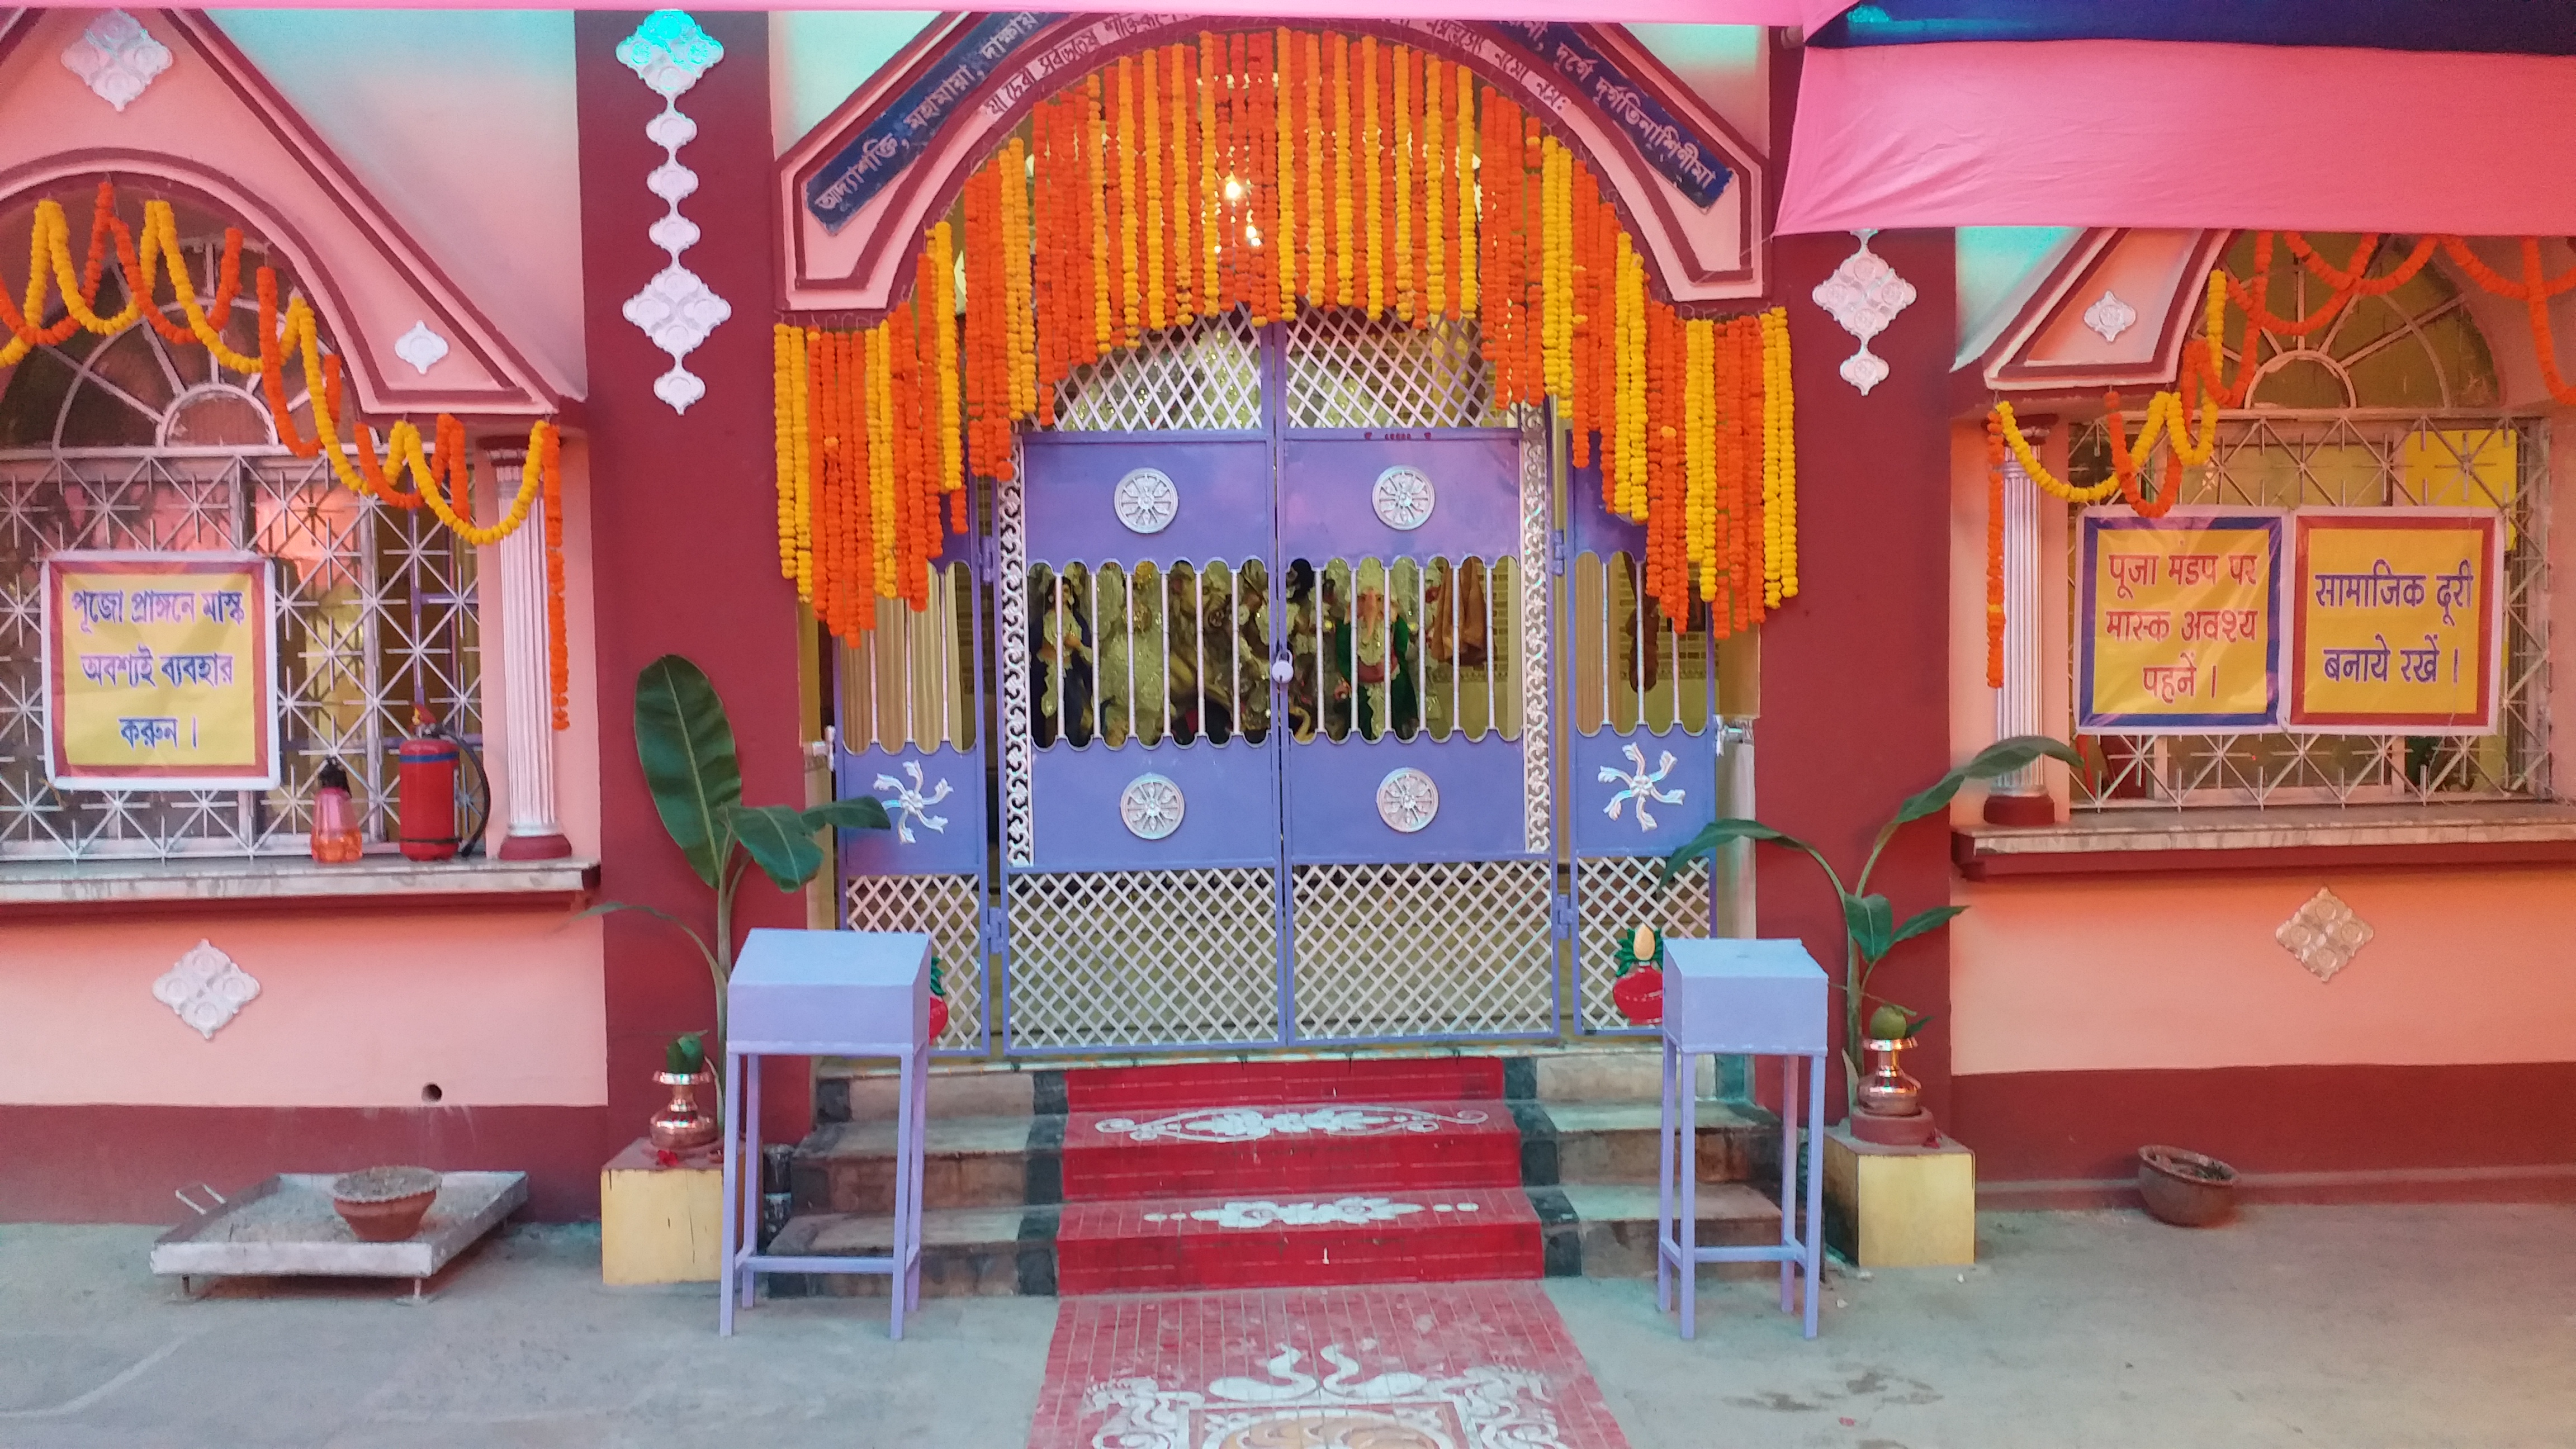 durga puja being celebrated for 203 years in jamtara